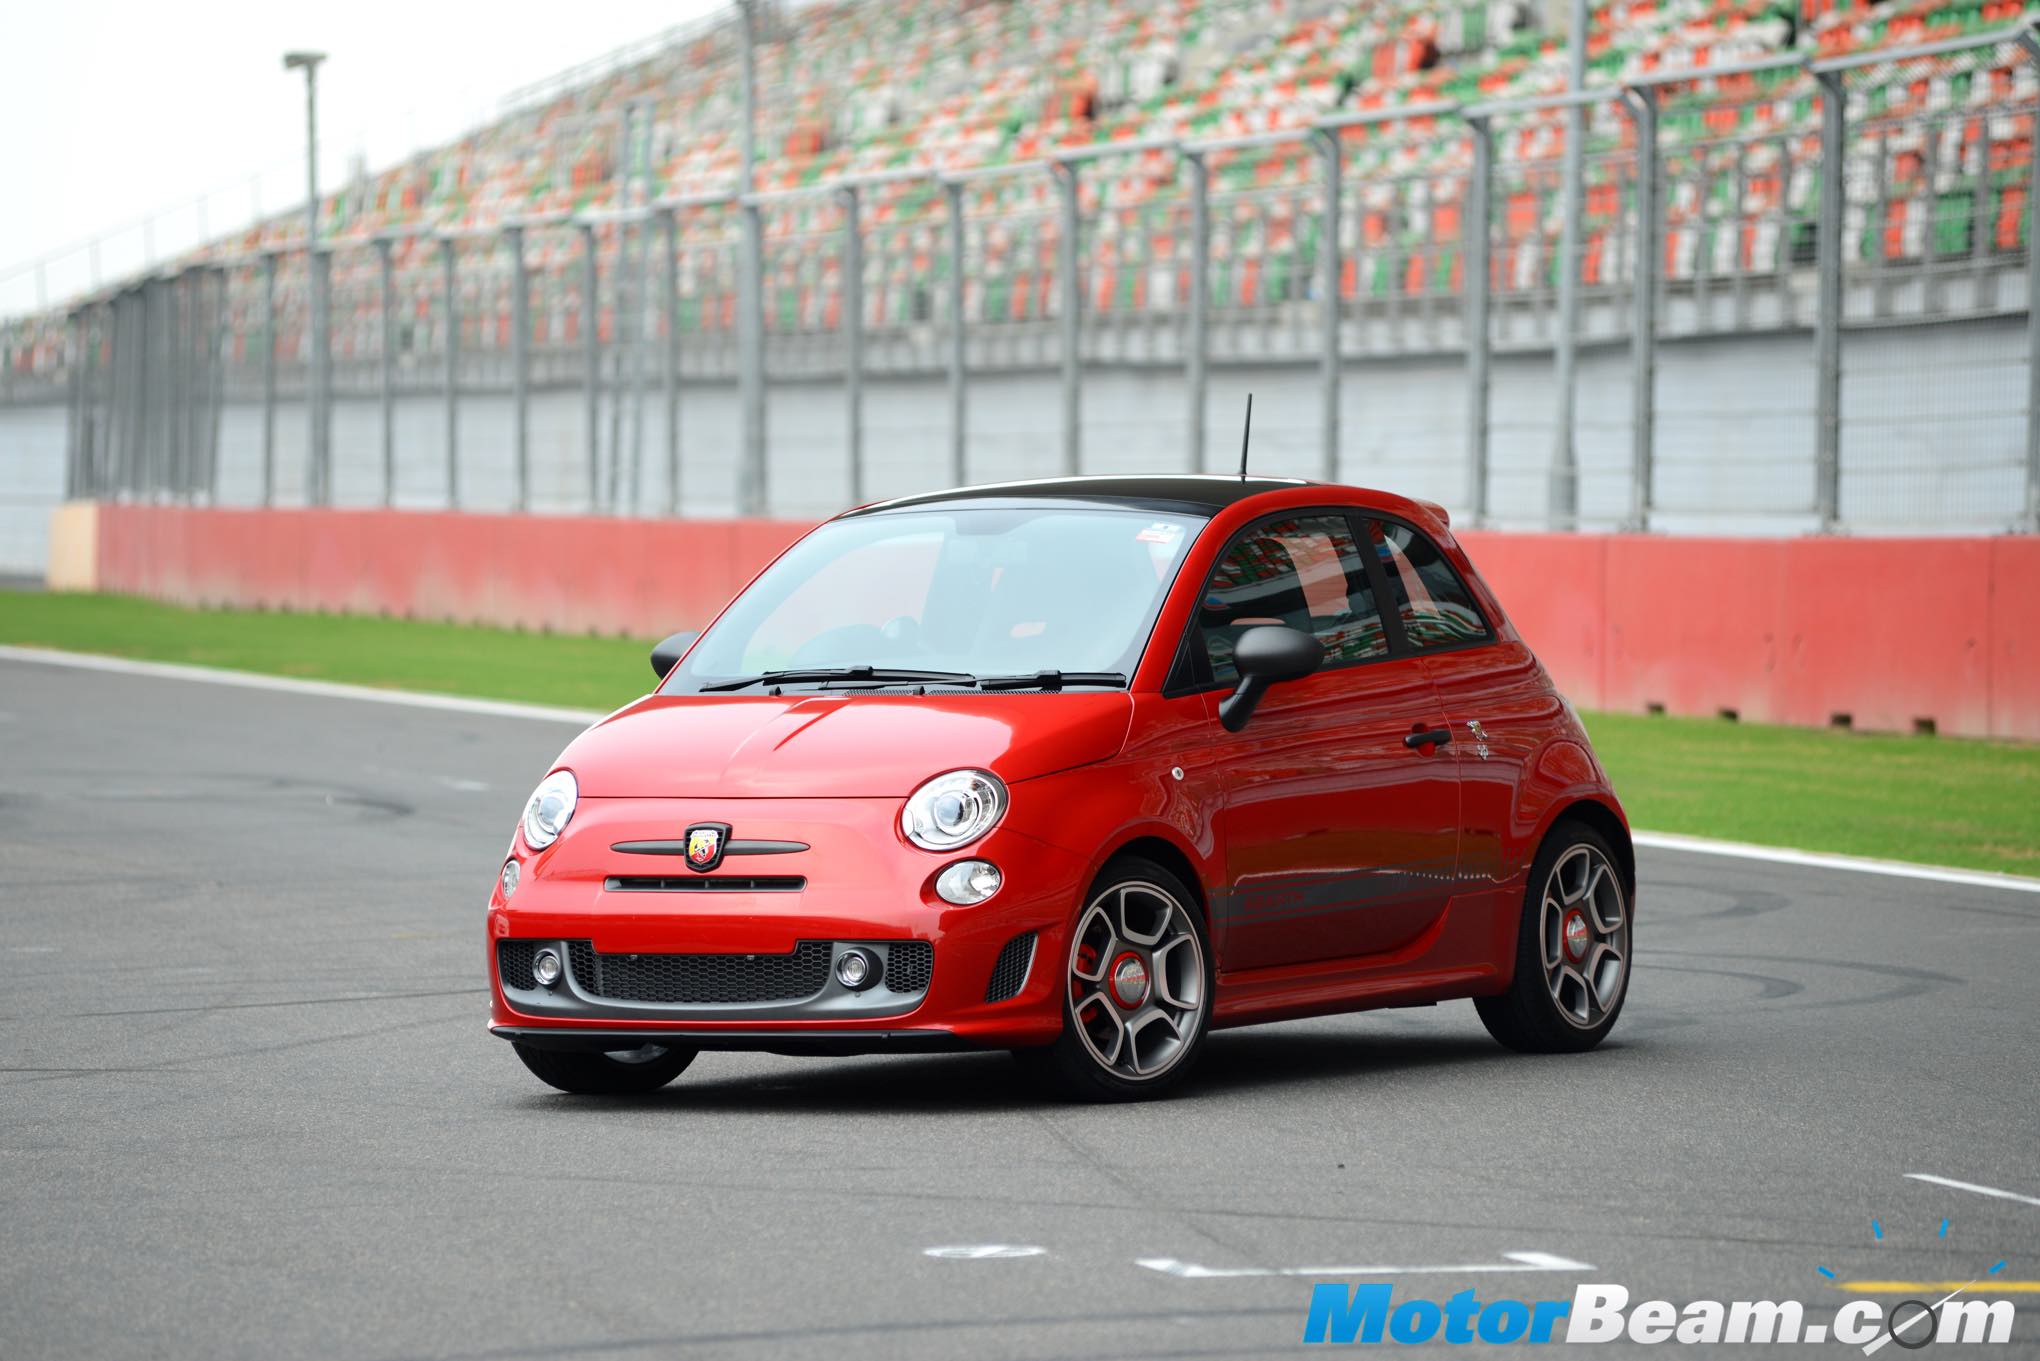 https://www.motorbeam.com/wp-content/uploads/Fiat-Abarth-595-Competizione-Review.jpg